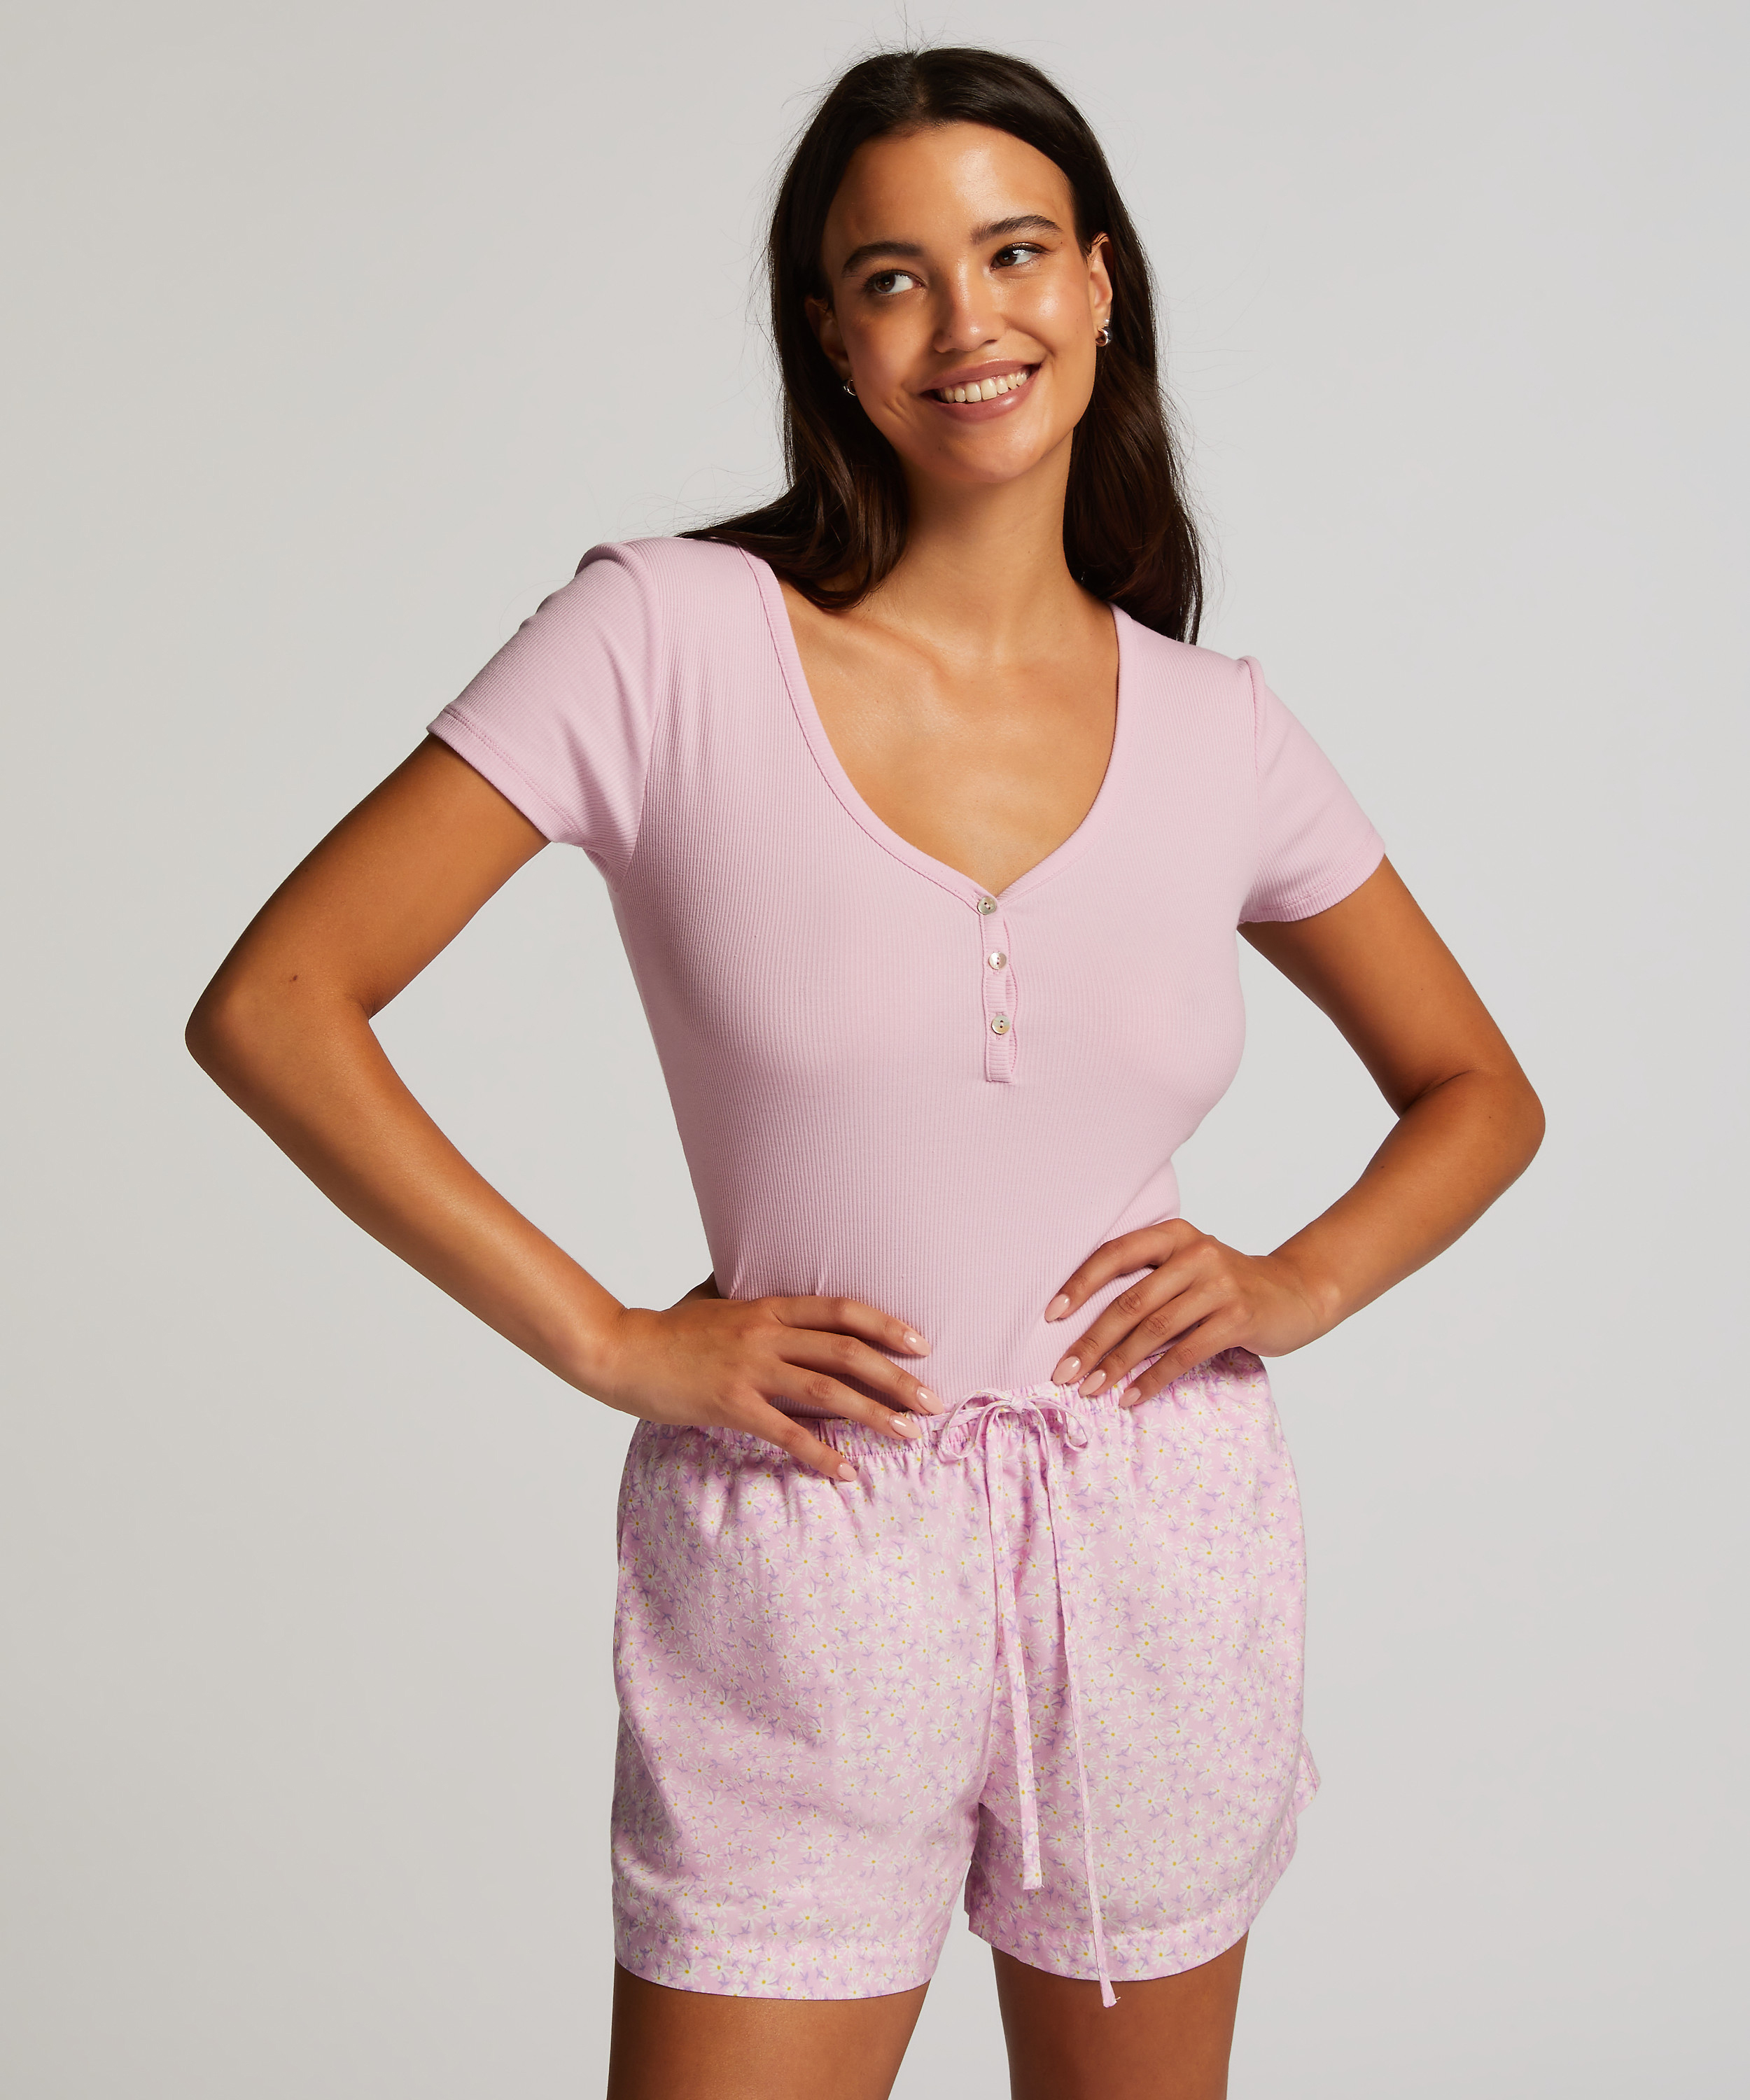 Pyjamasshorts, pink, main